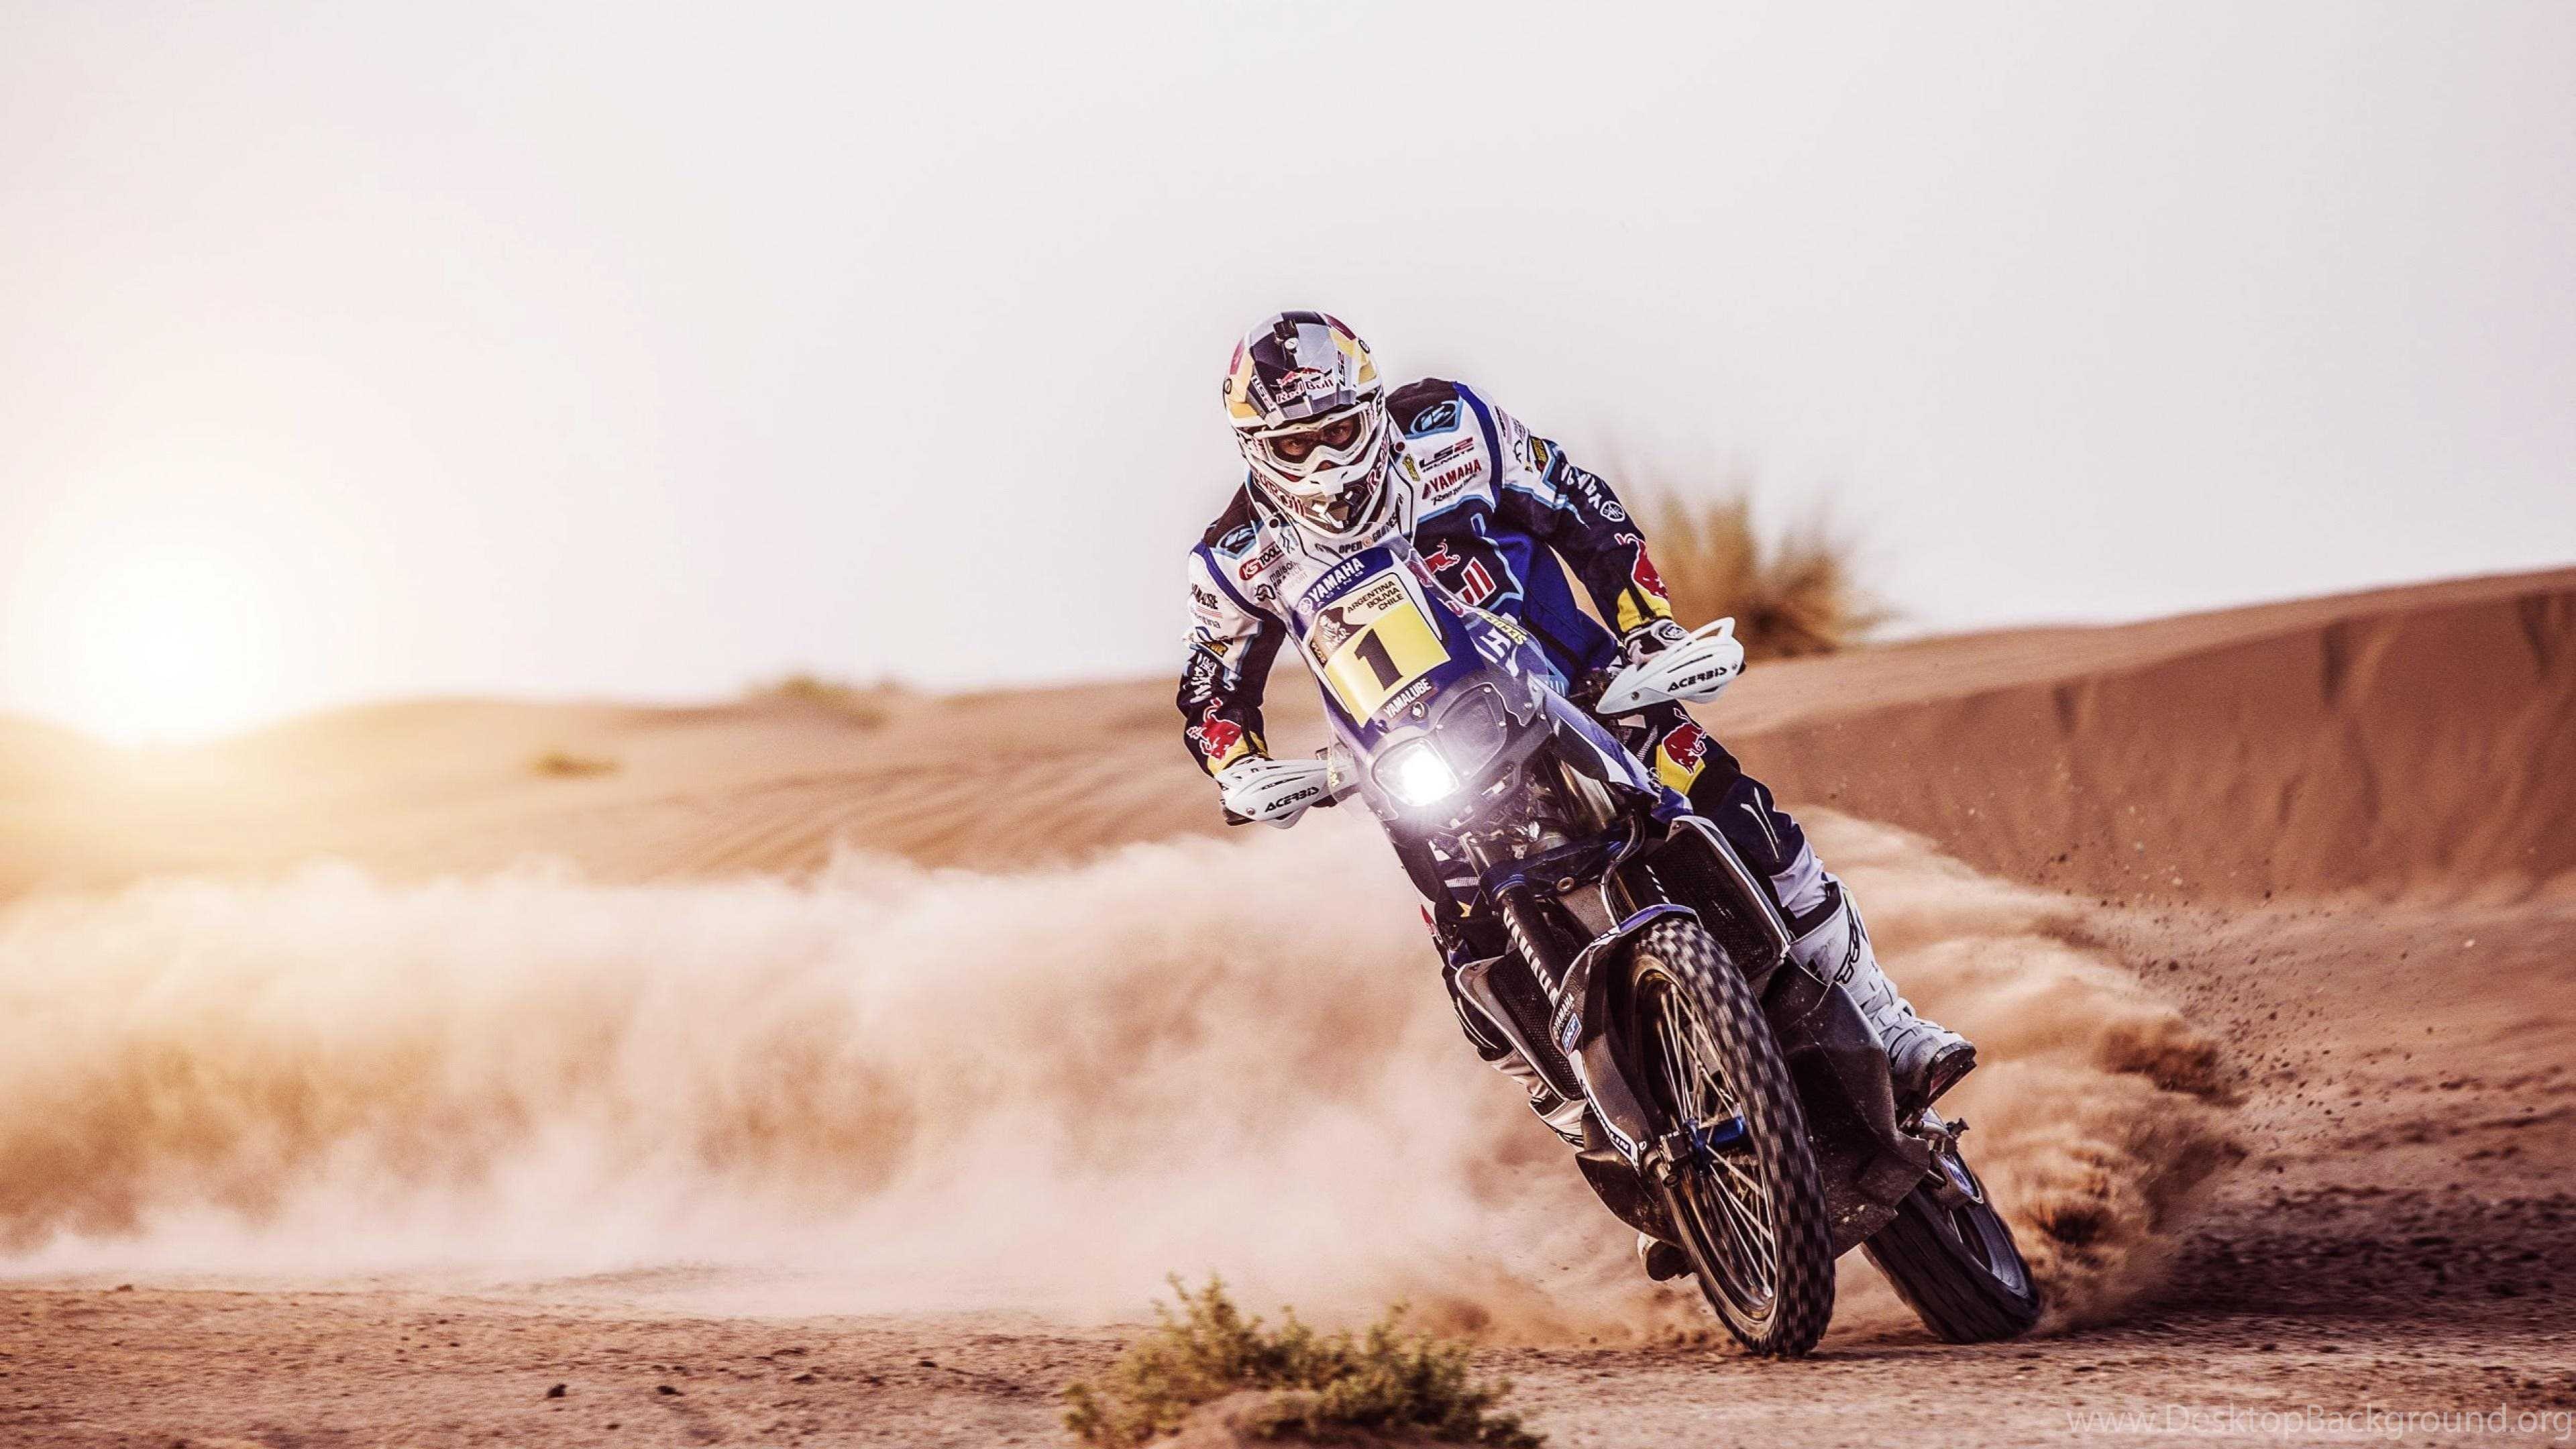 Motocross: Pillars of Dust From Under the Wheels, Desert Pursuit. 3840x2160 4K Background.